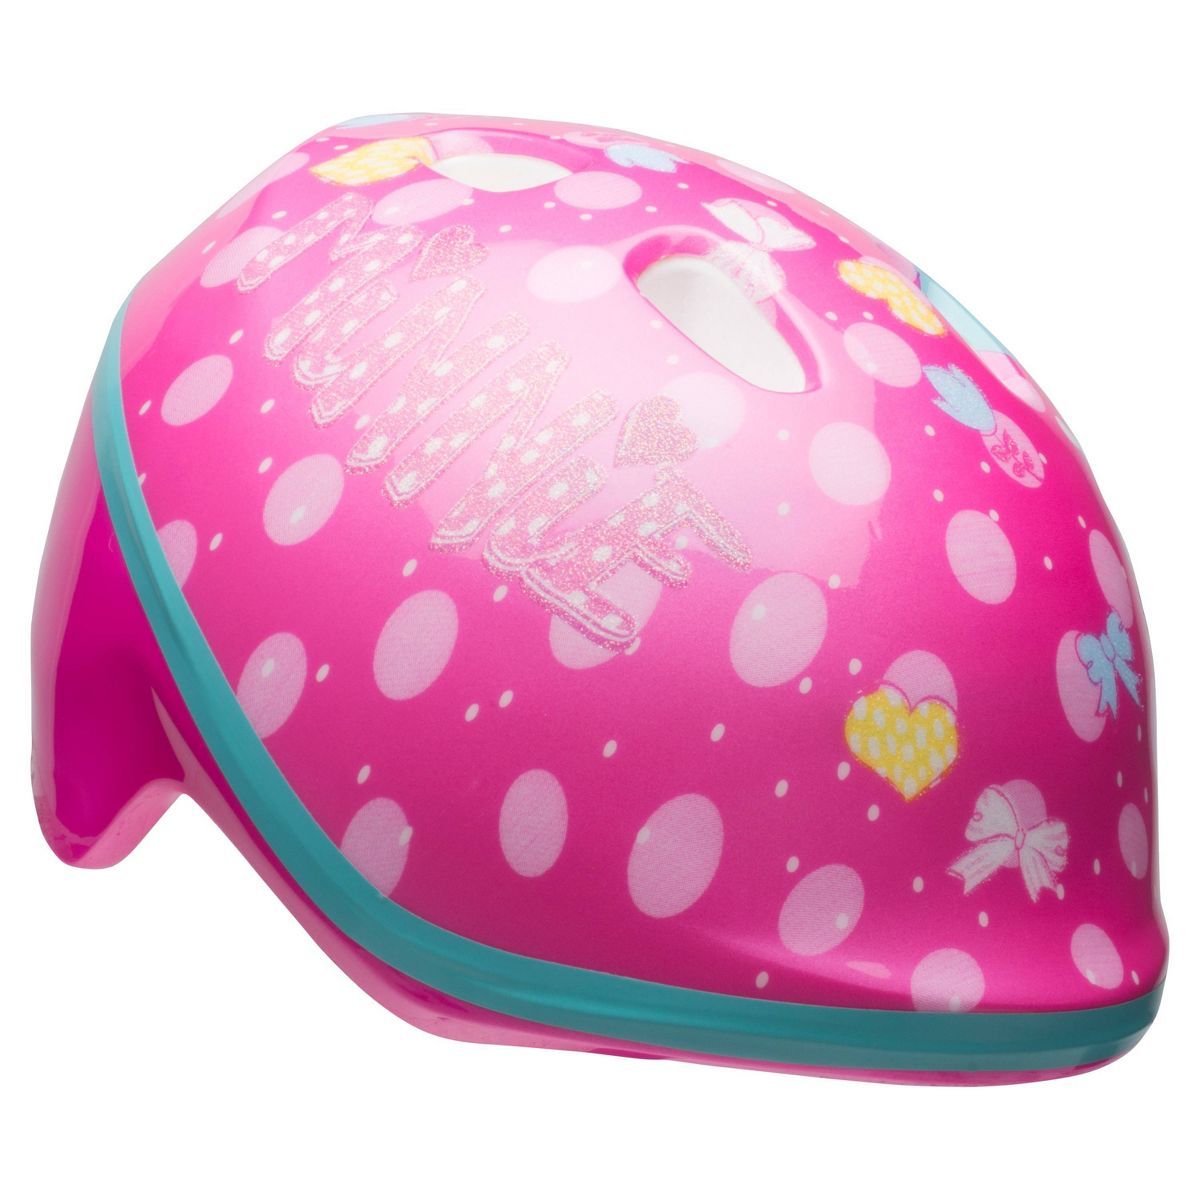 Minnie Mouse Toddler Bike Helmet - Pink | Target